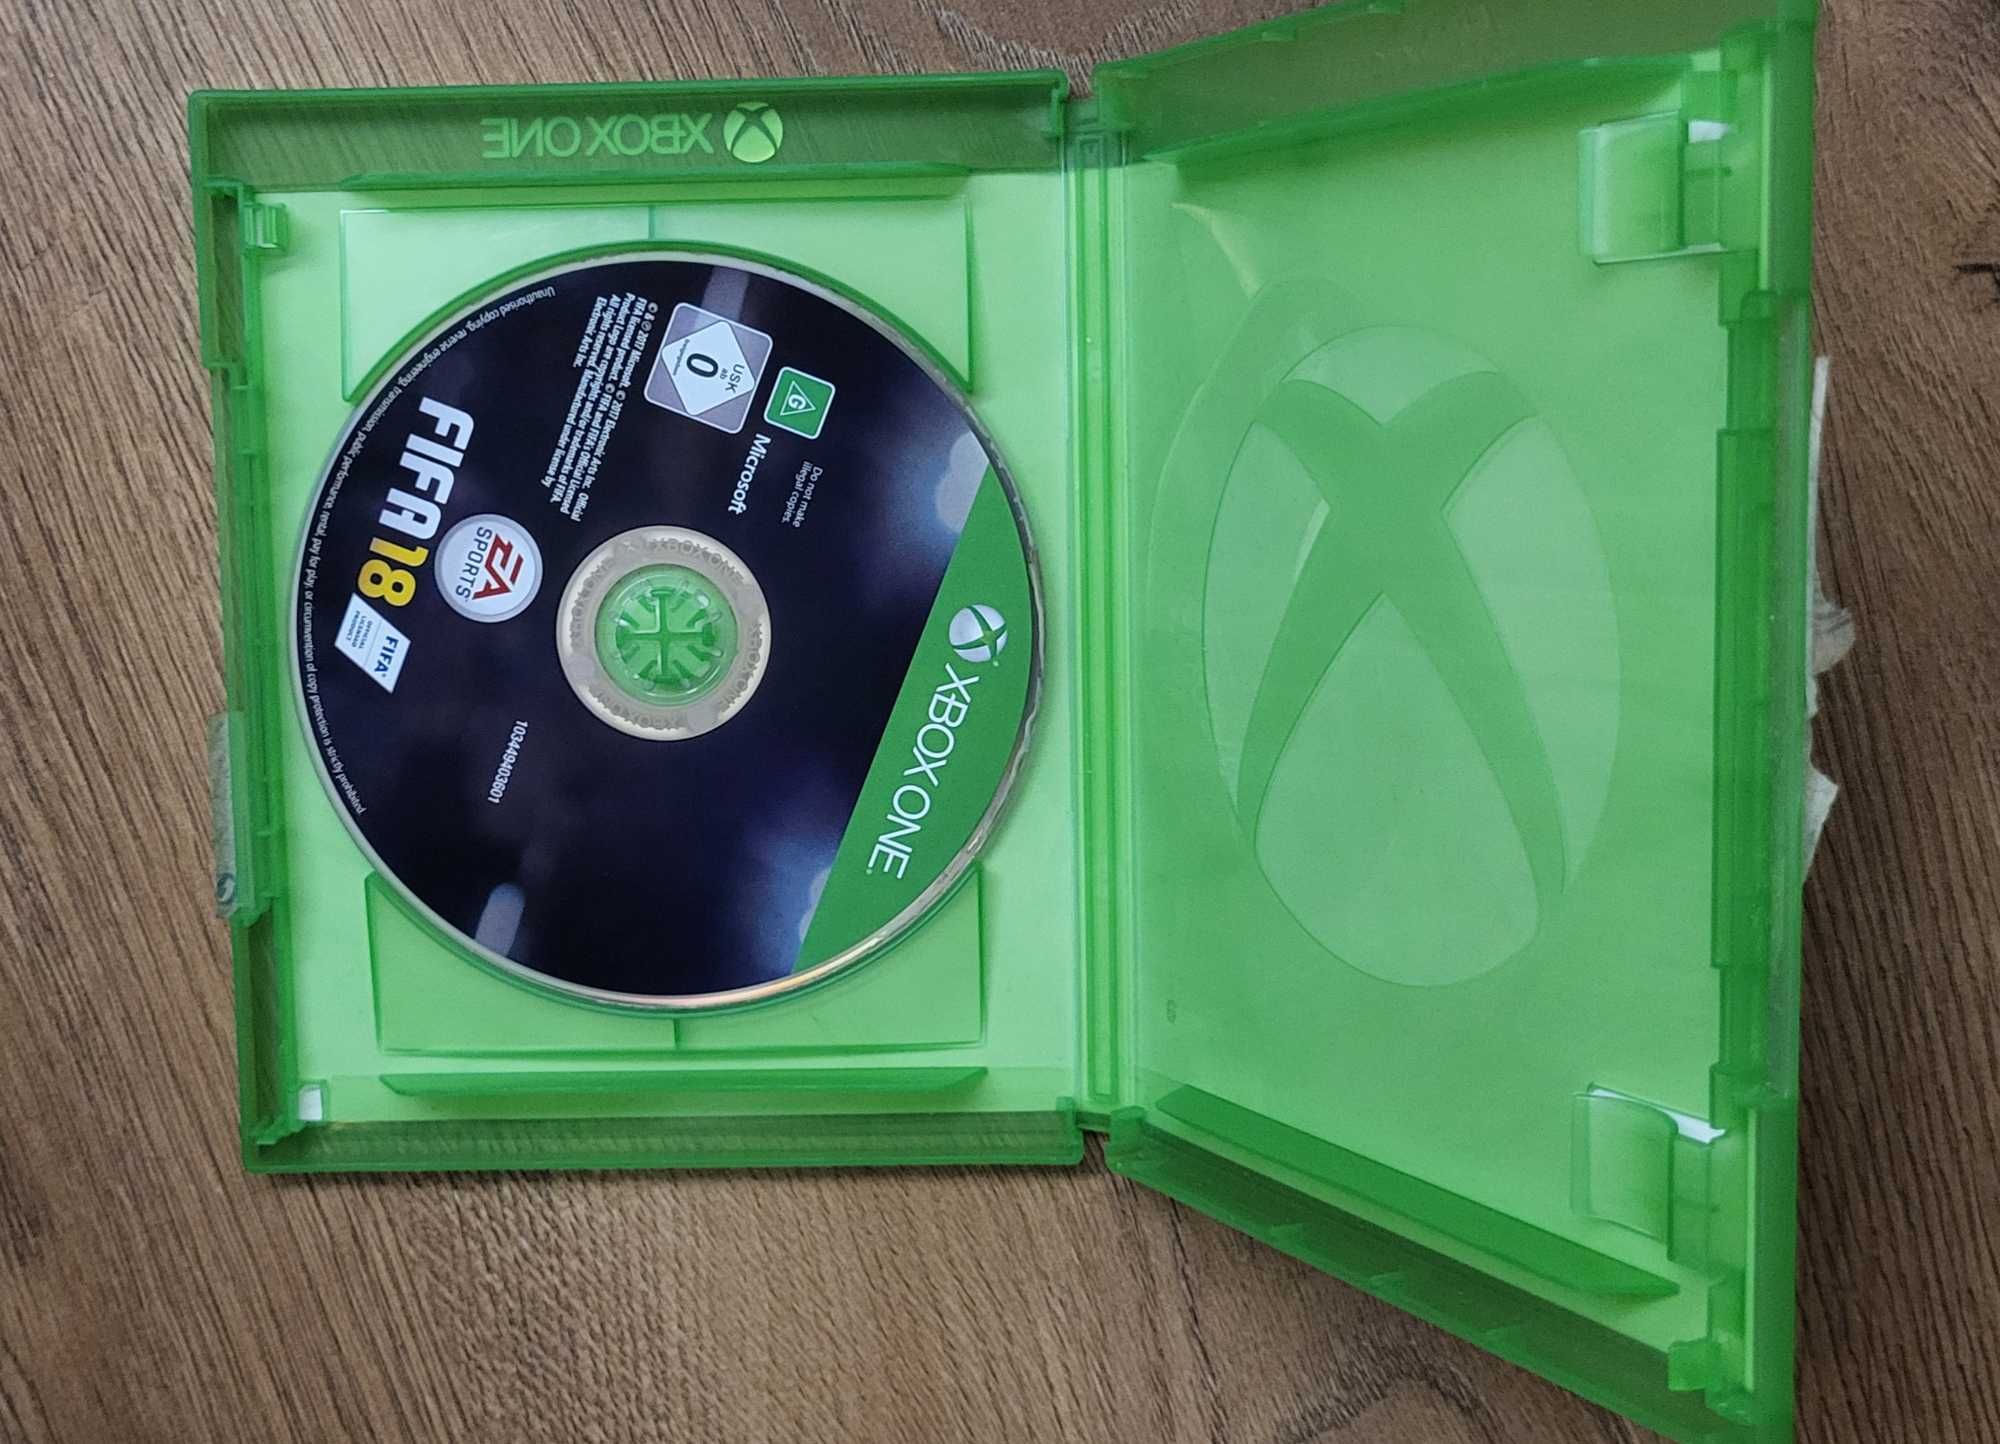 Fifa18 Xbox One S